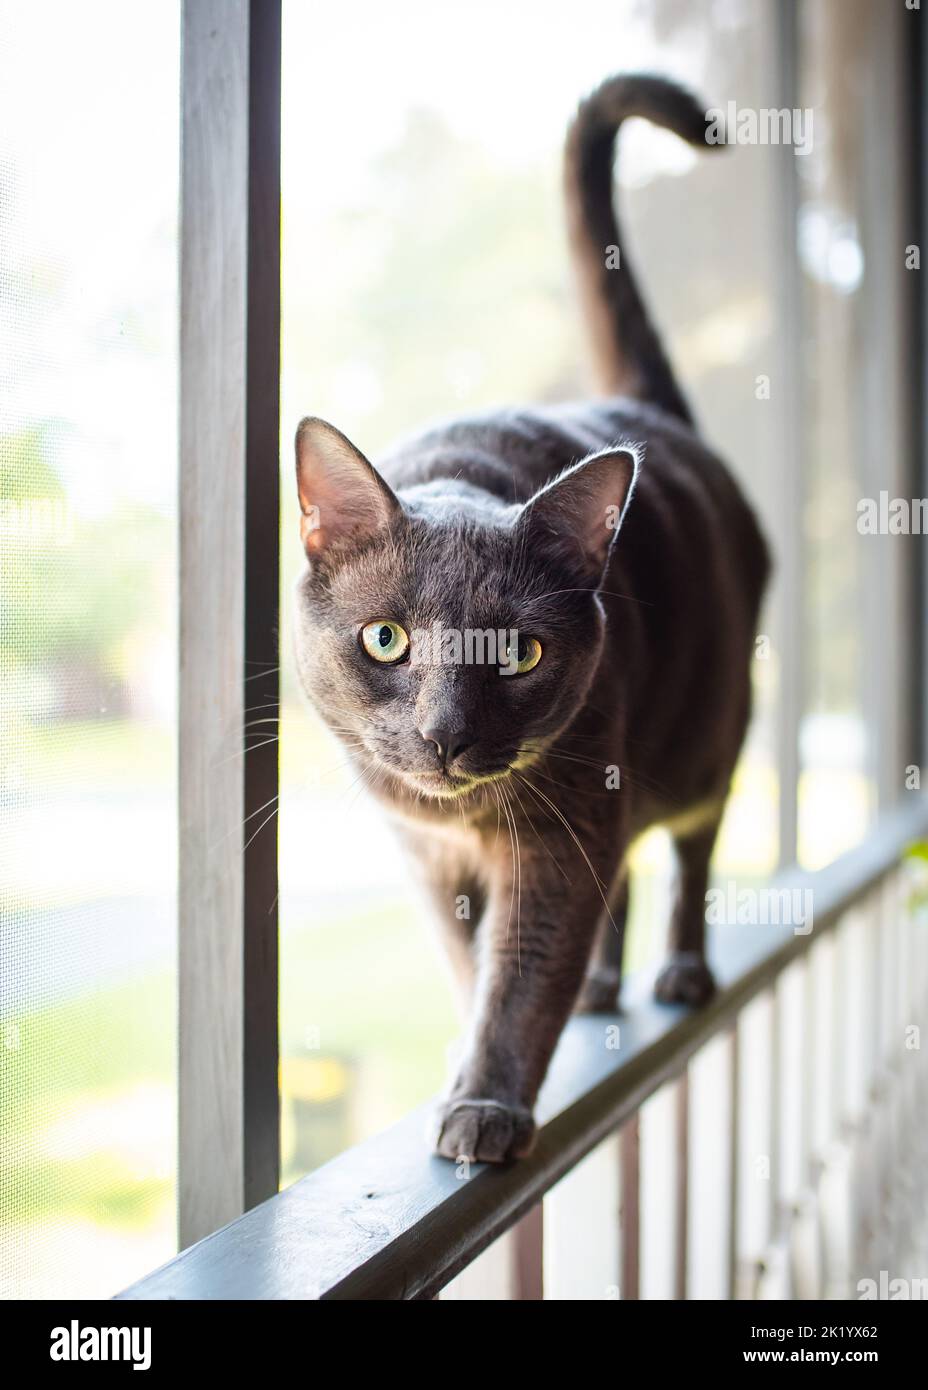 Close up of black cat with bright green eyes walking along railing. Stock Photo